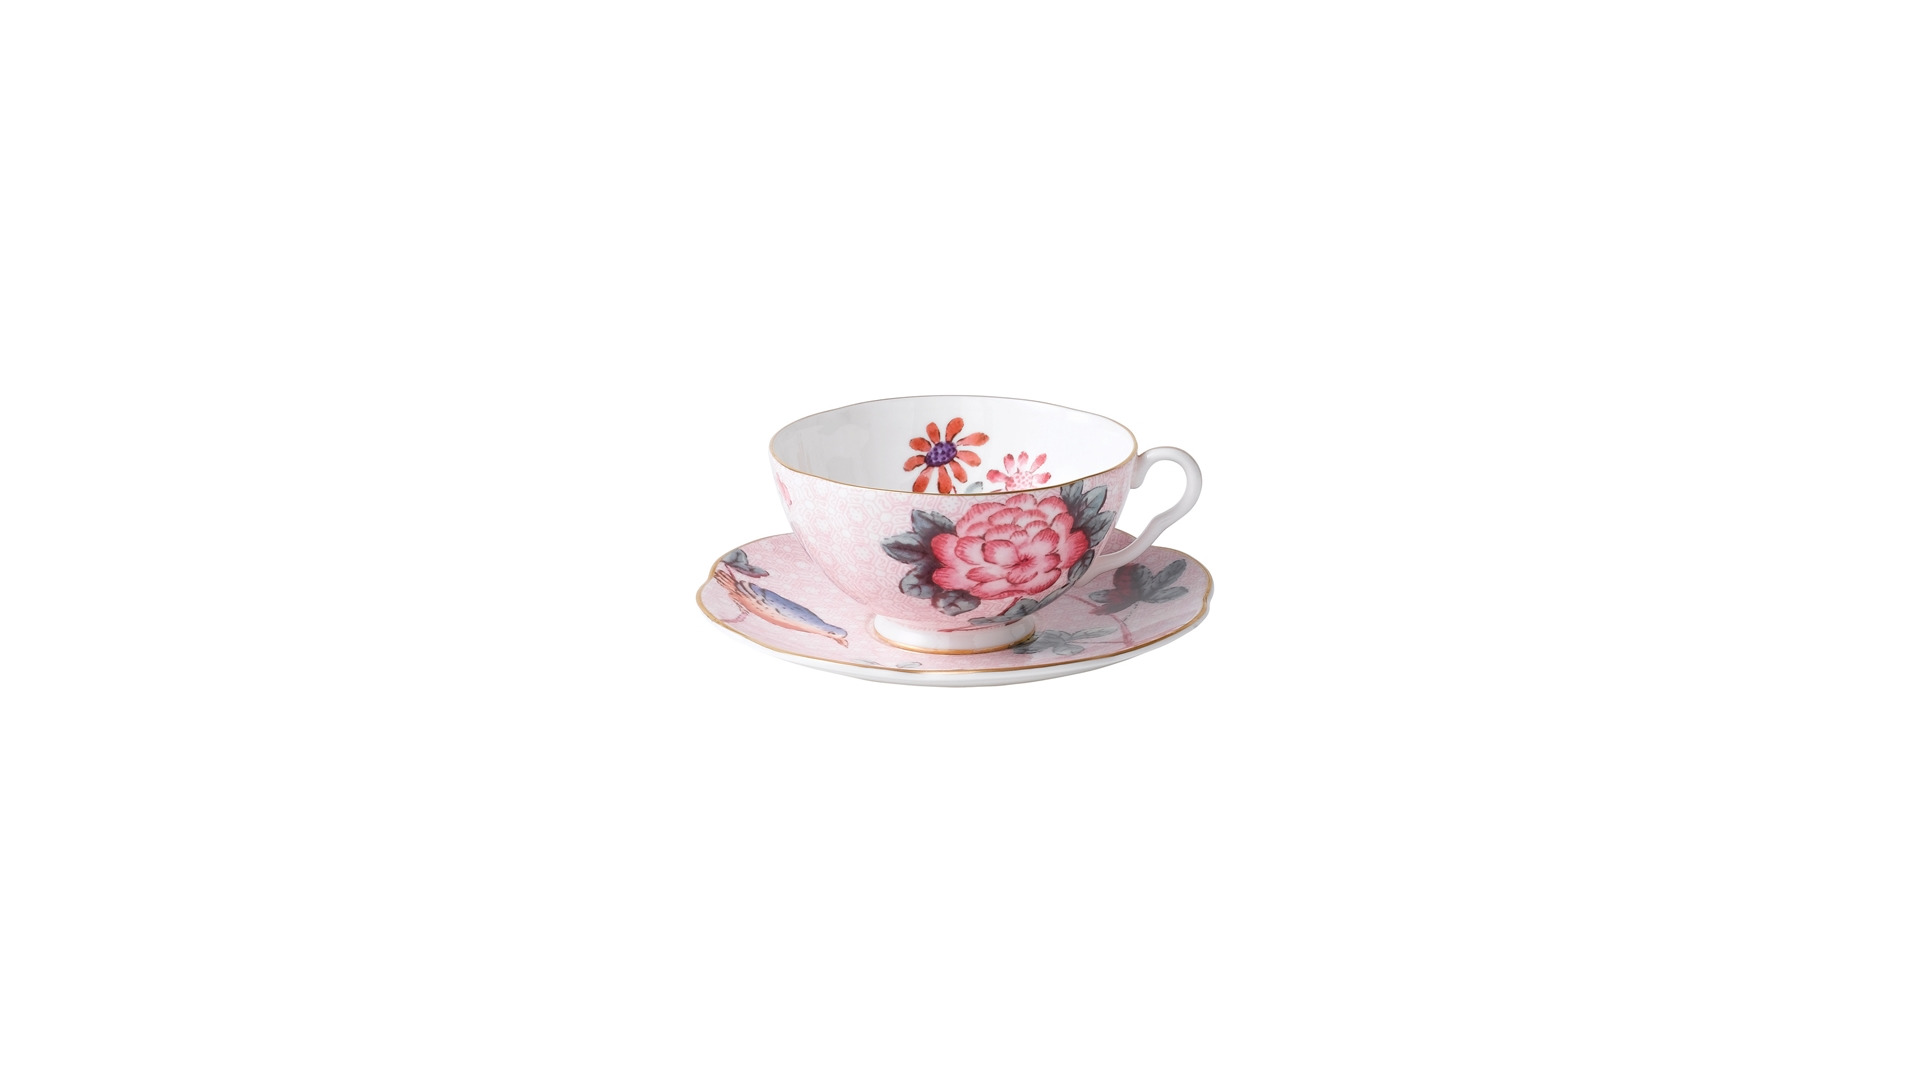 Чашка чайная с блюдцем Wedgwood Кукушка 180 мл, розовая, фарфор